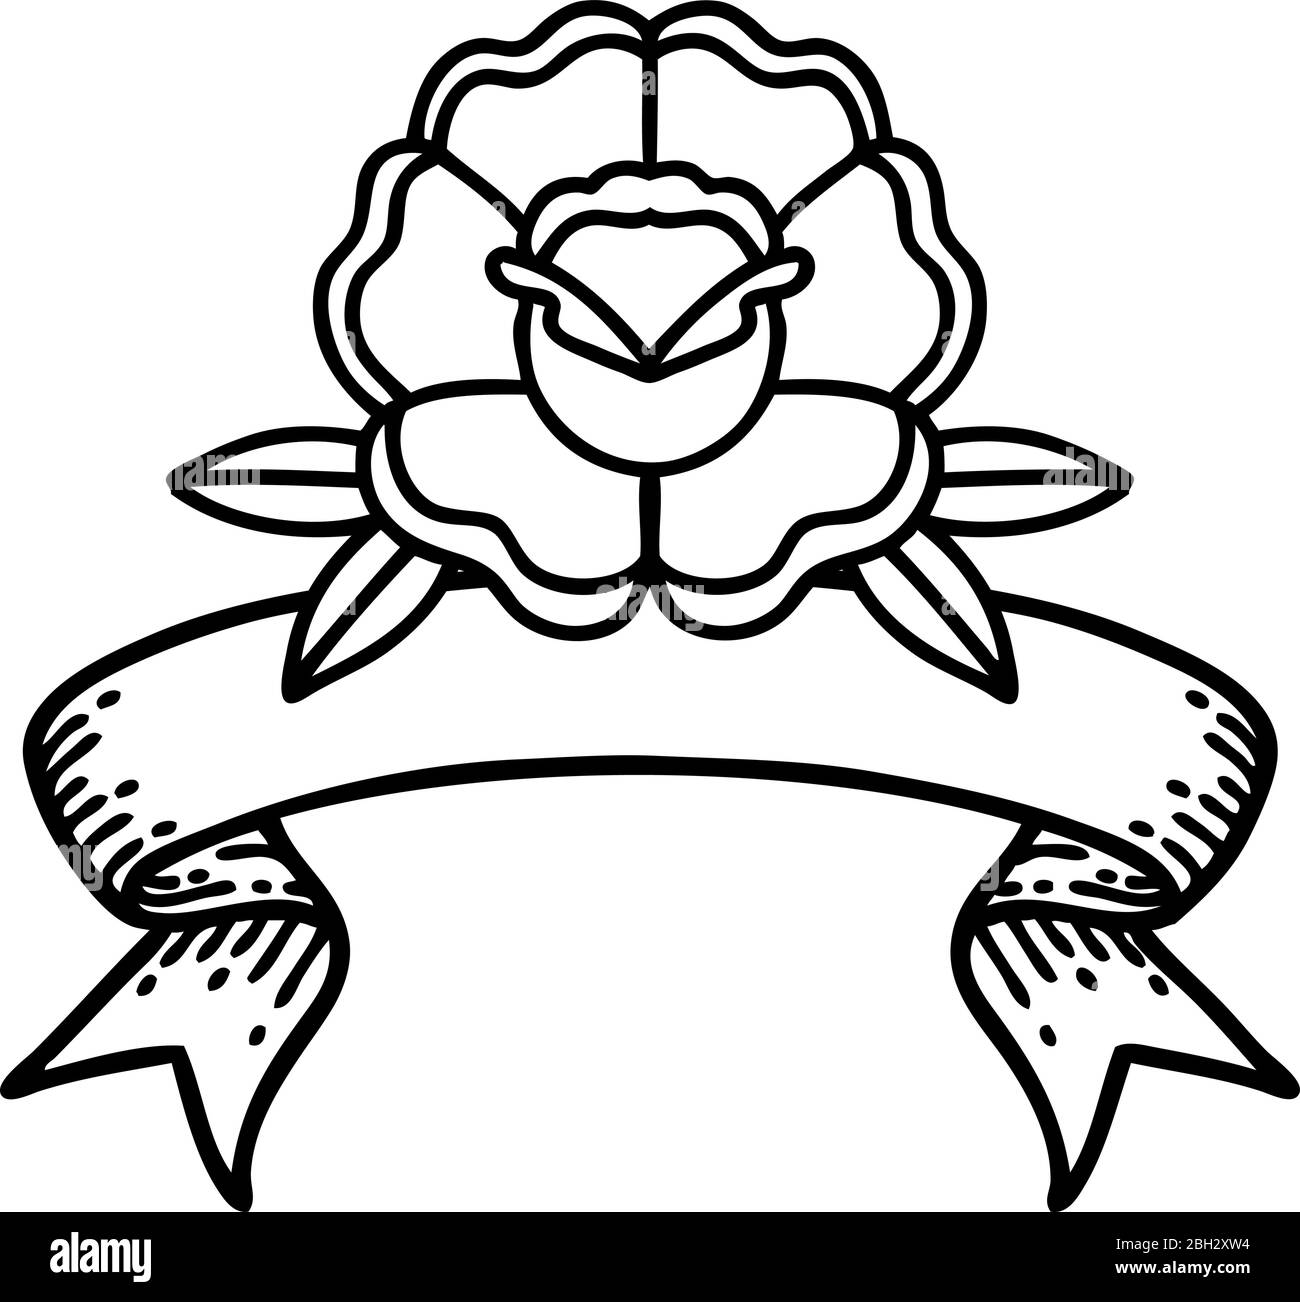 Tattoo Flowers Peony Art Line Work Stock Vector Royalty Free 1270602949   Shutterstock